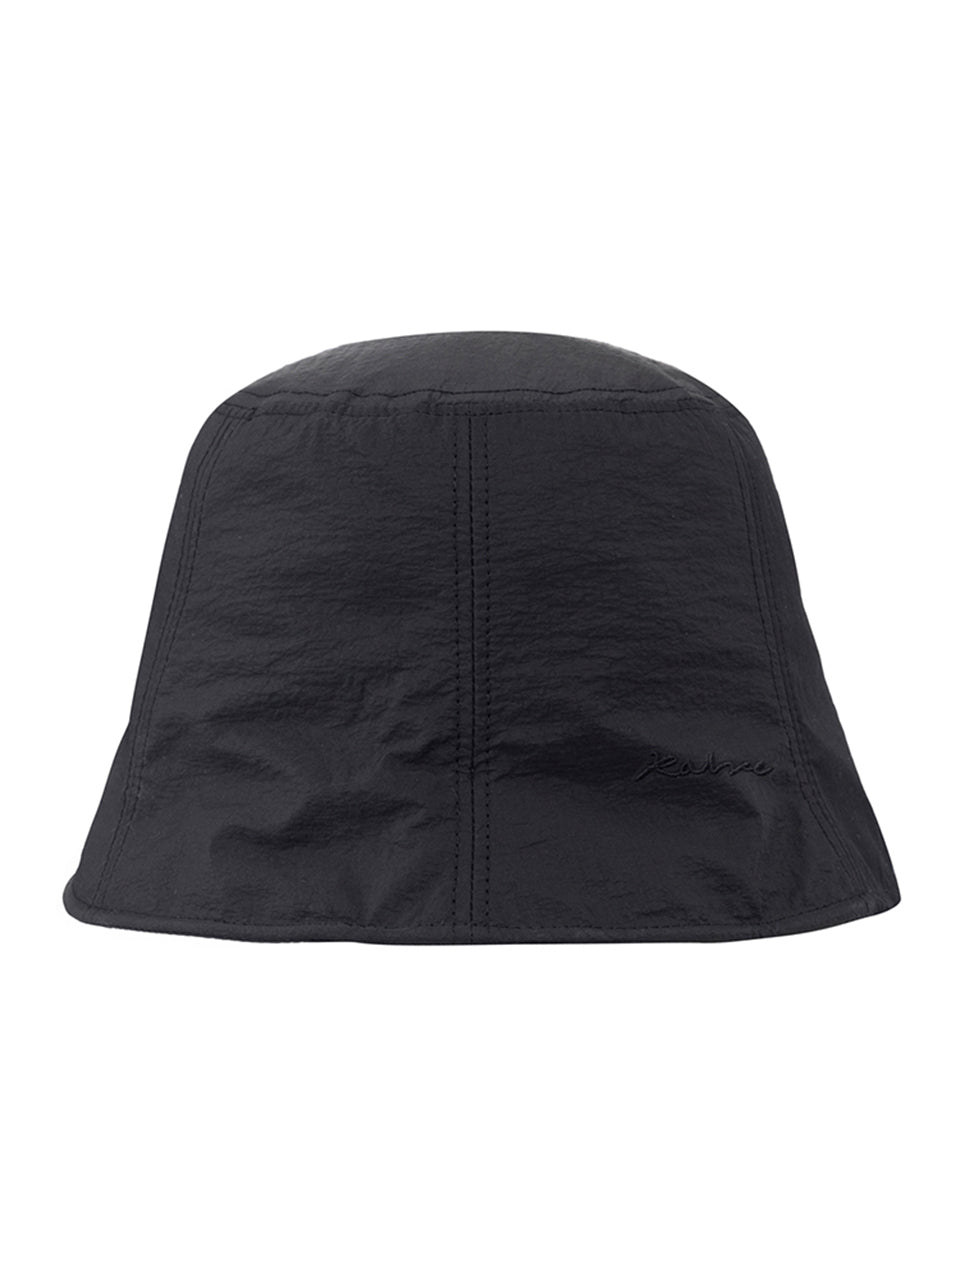 Ribbon Strap Bucket Hat in Black